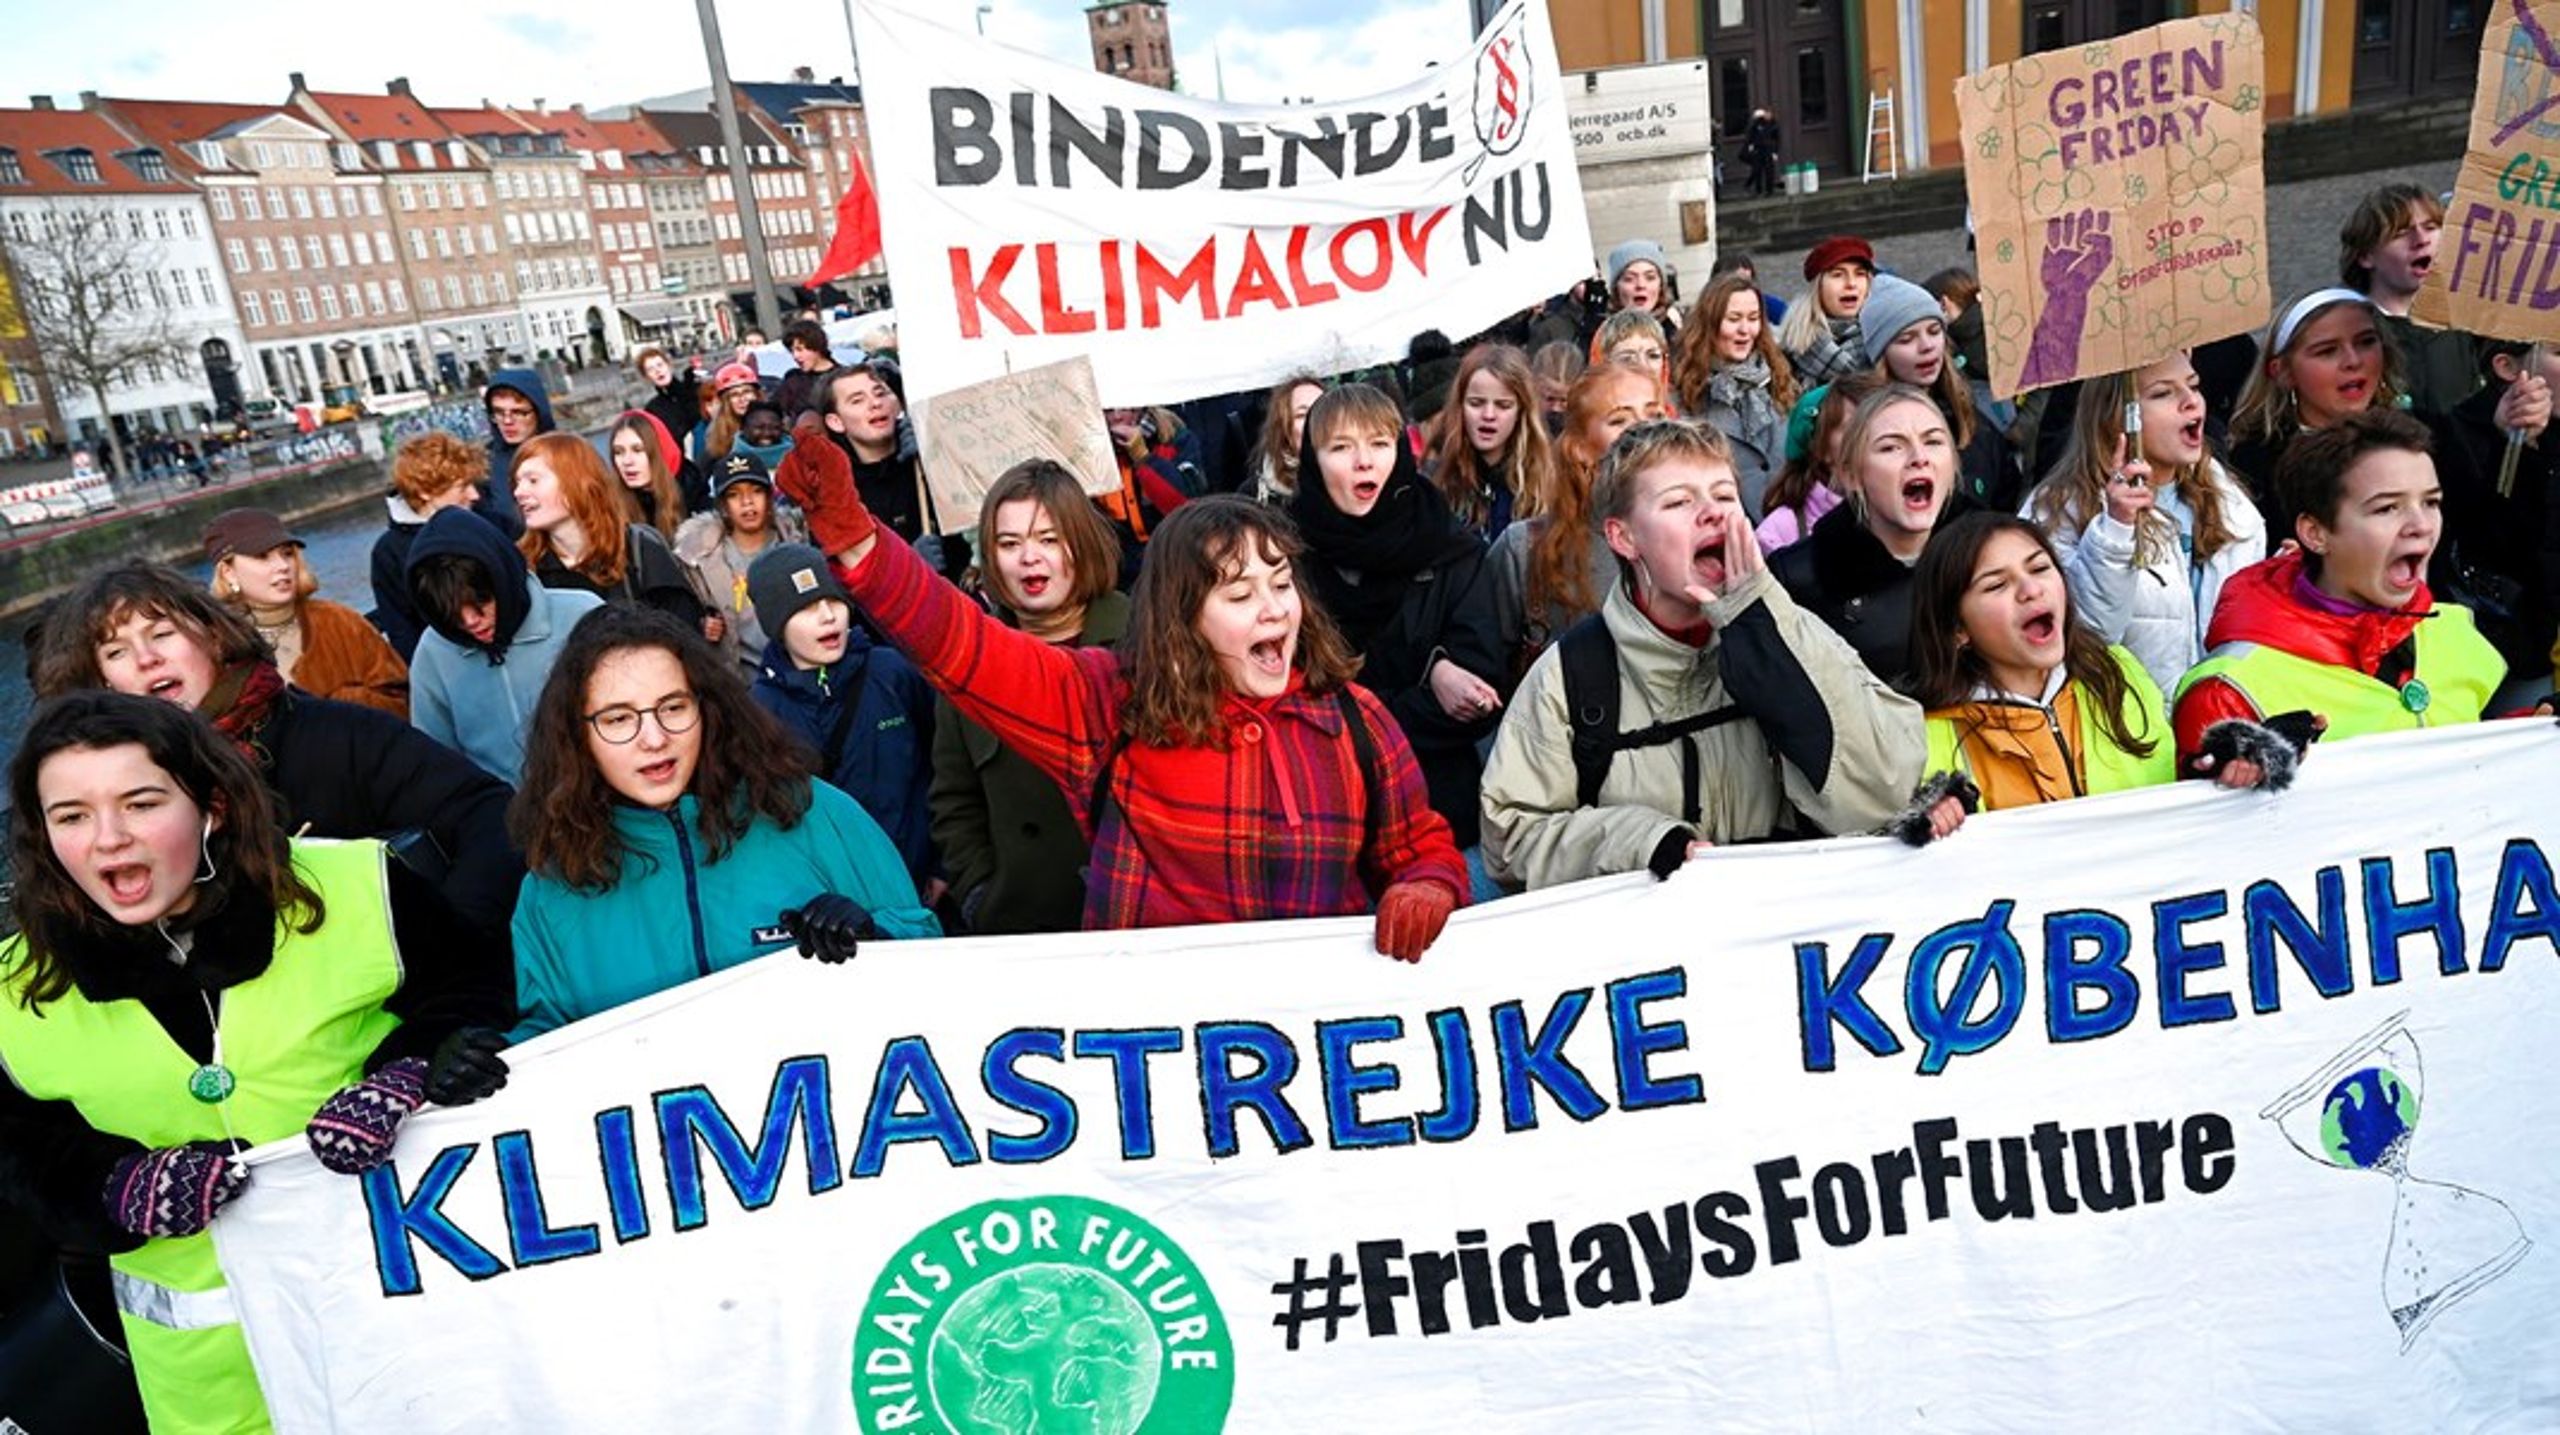 Klimastrejke foran Christiansborg i 2019.&nbsp;